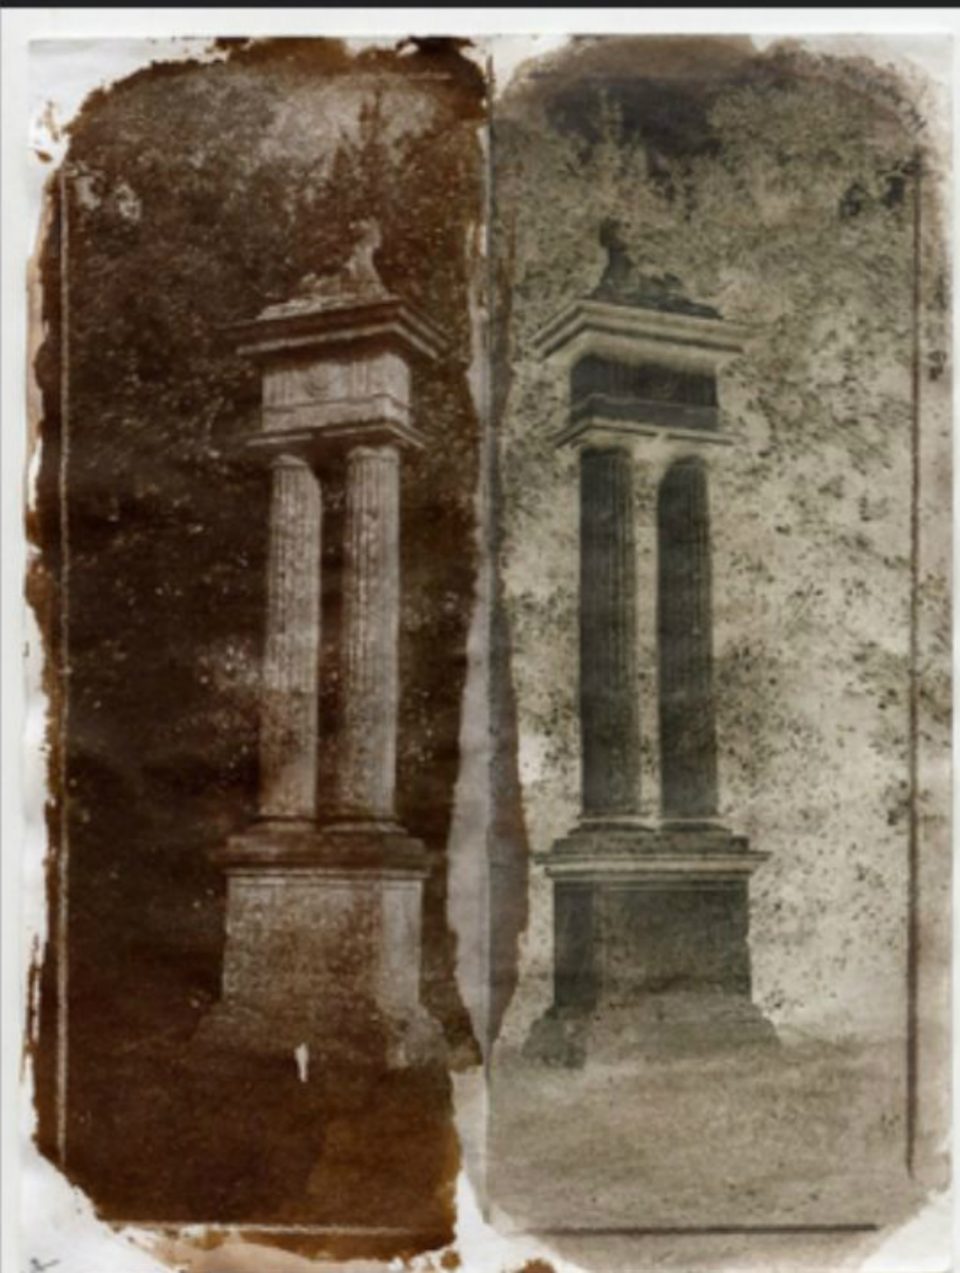 Columns with a sphinx in the Lacock Abbey, ©Claudio Santambrogio
